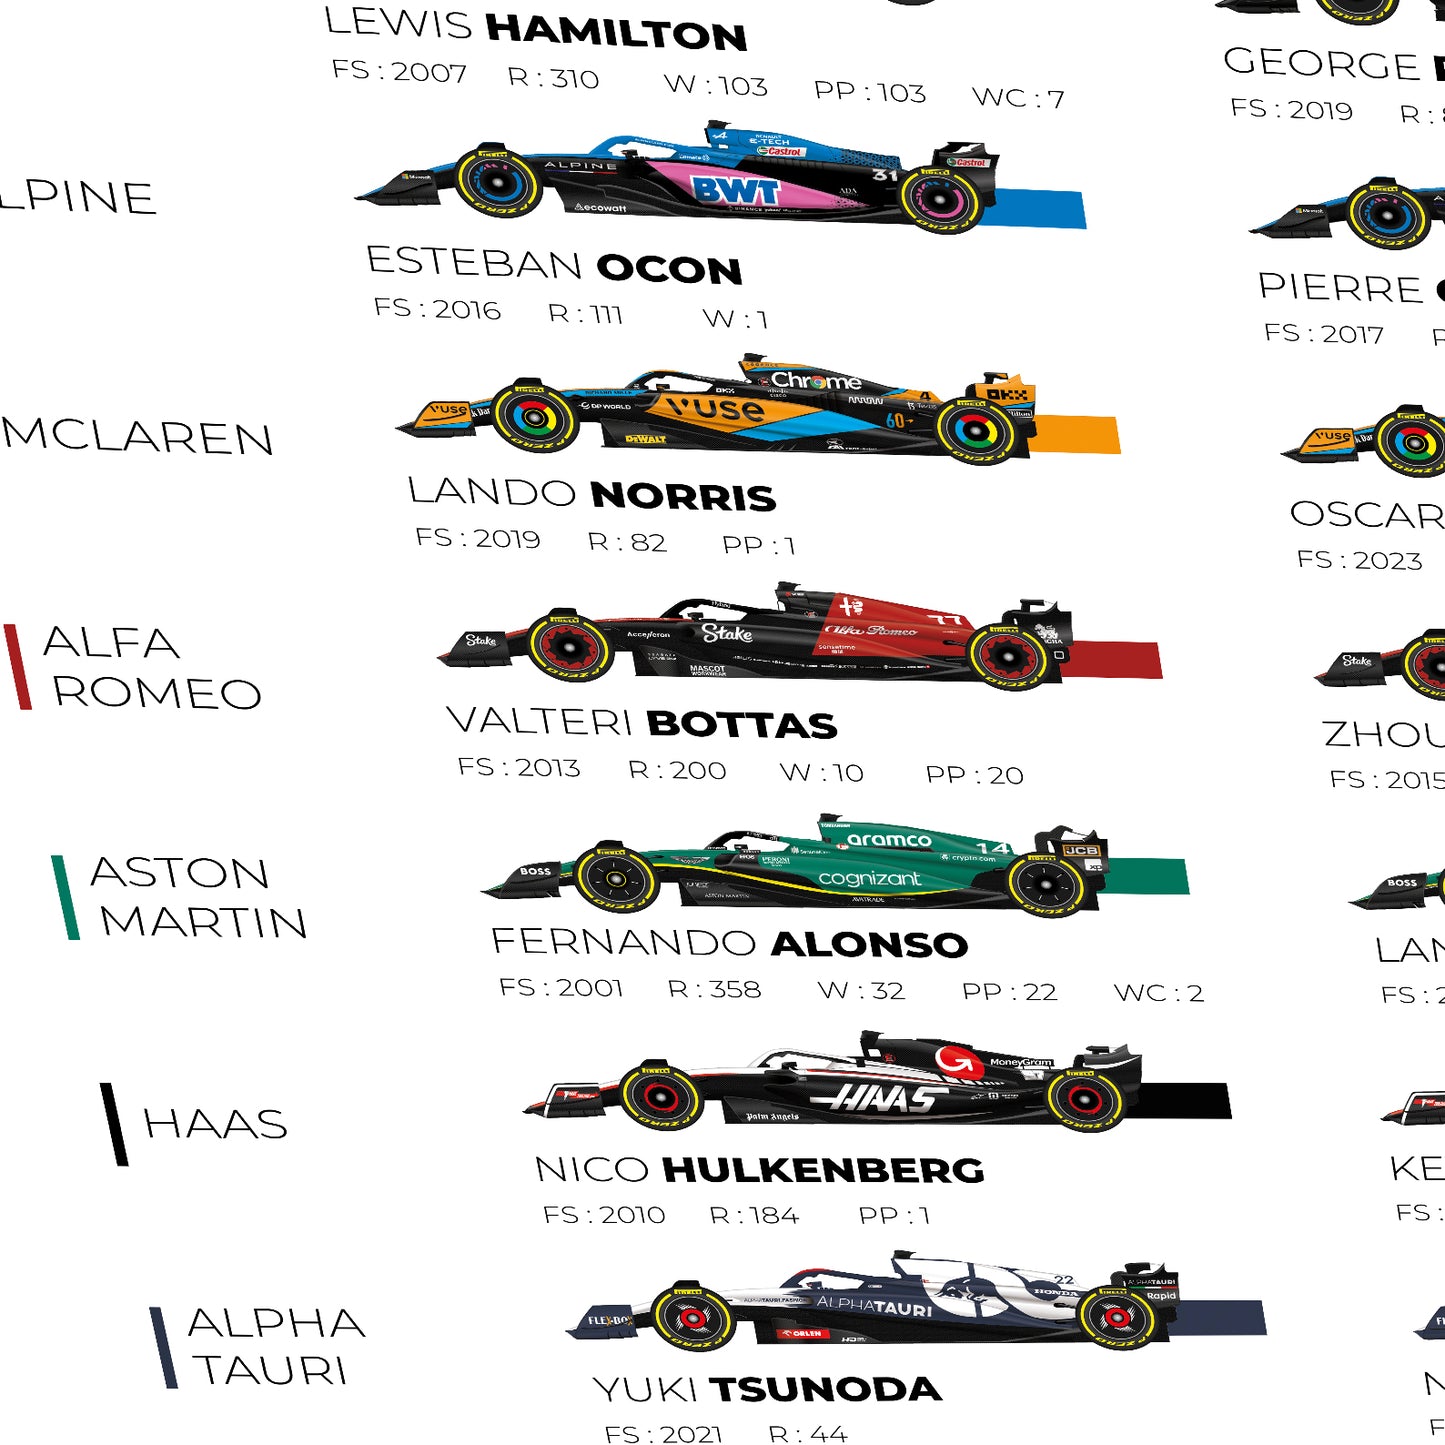 Formula 1 2023 Teams and Drivers Poster